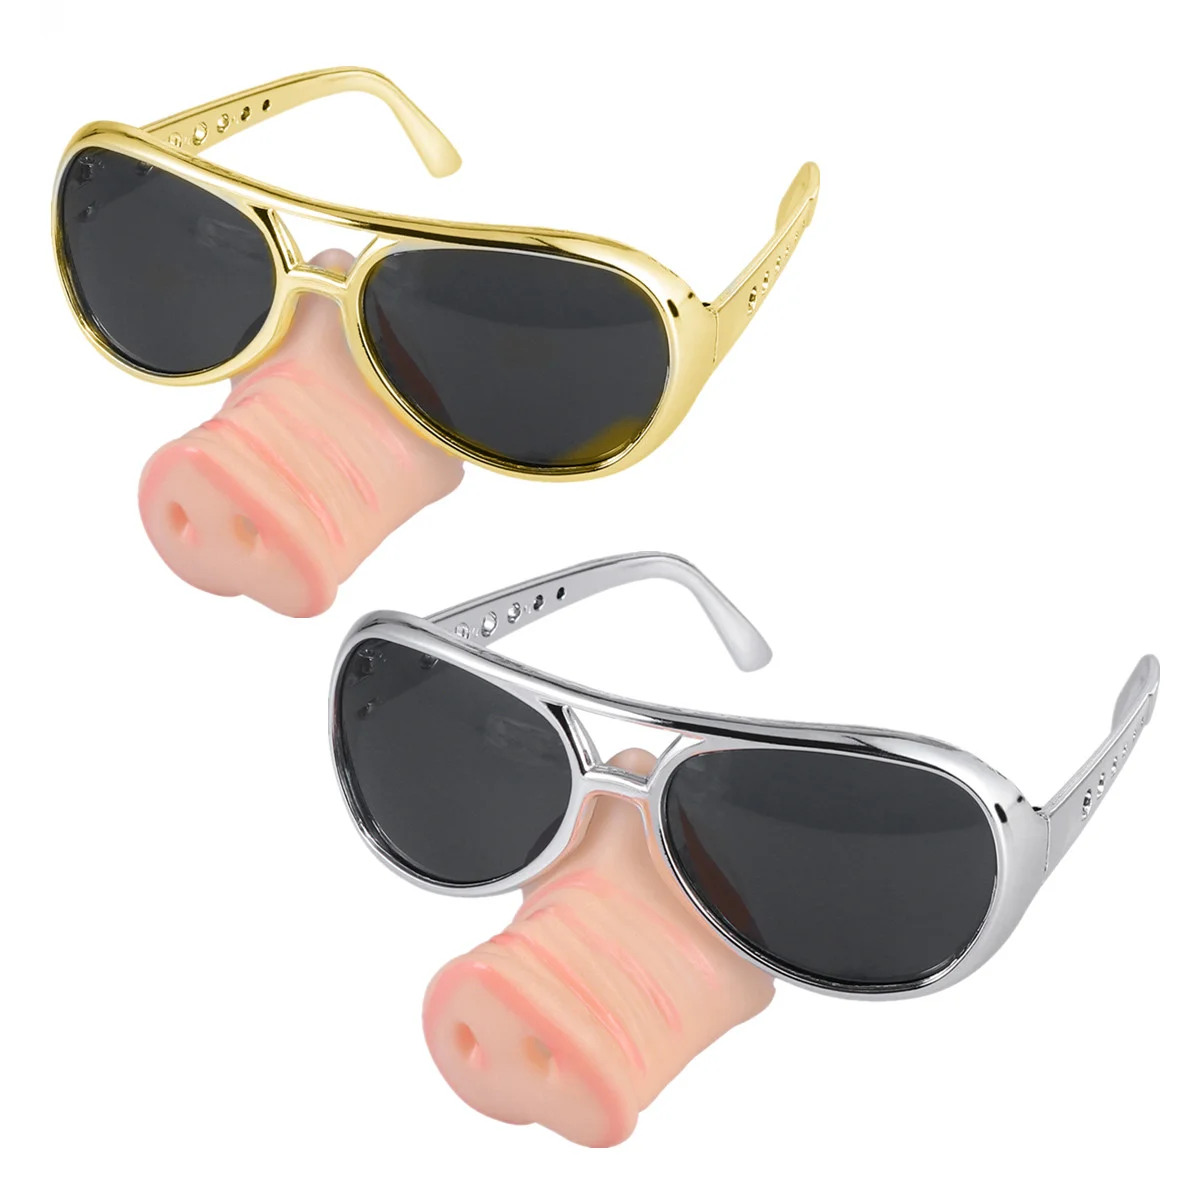 

Glasses Nose Disguisefunny Novelty Party Eyeweareyeglasses Eye Fake Sunglasses Photobooth Props Prank